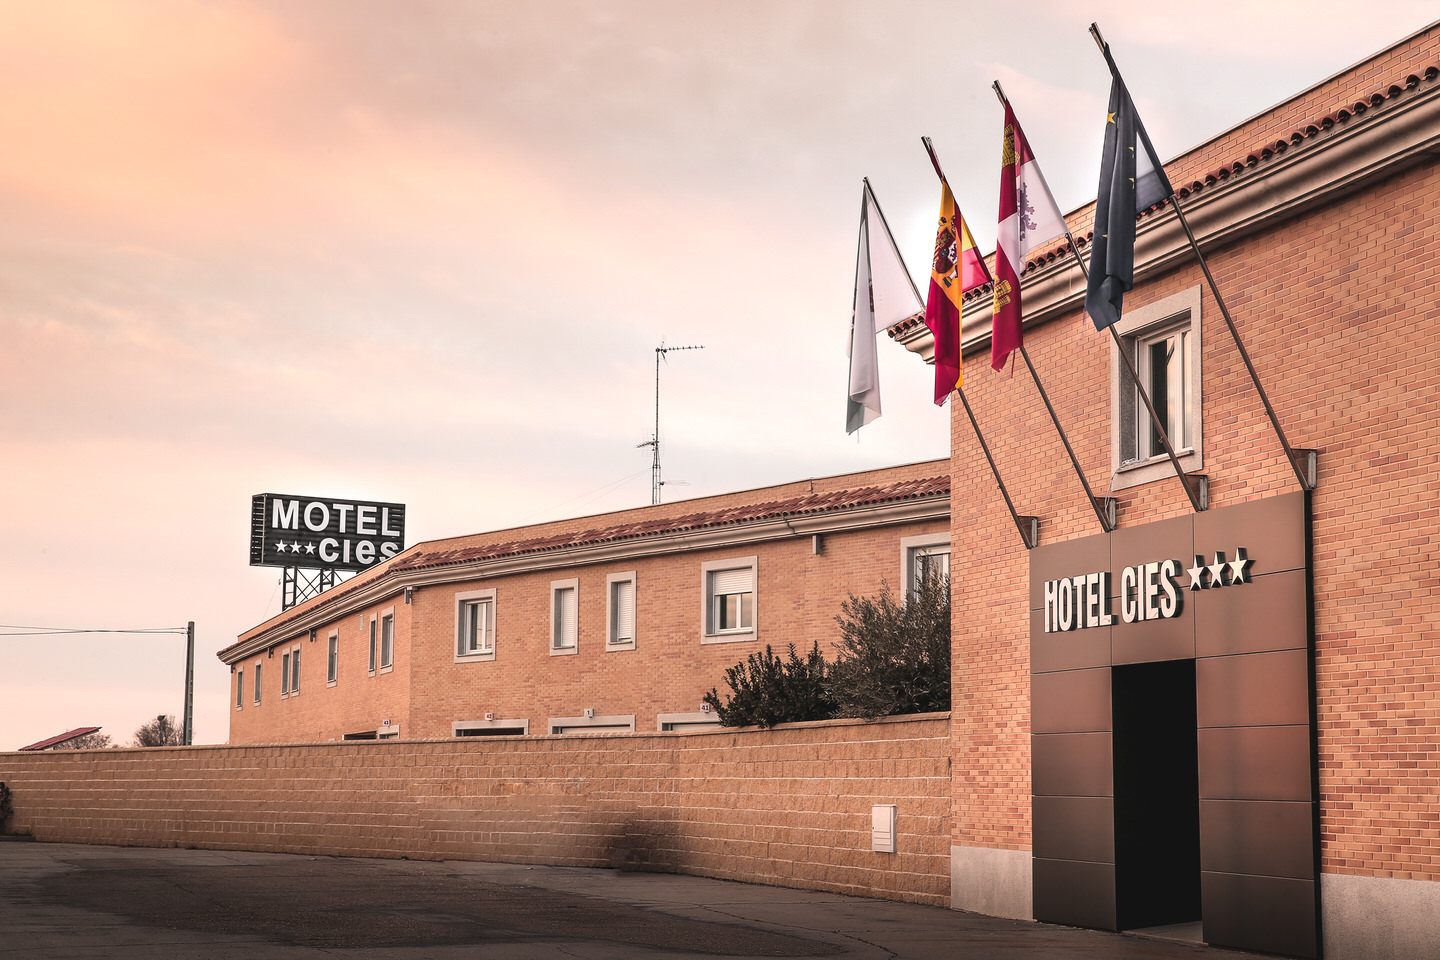 Motel Cíes